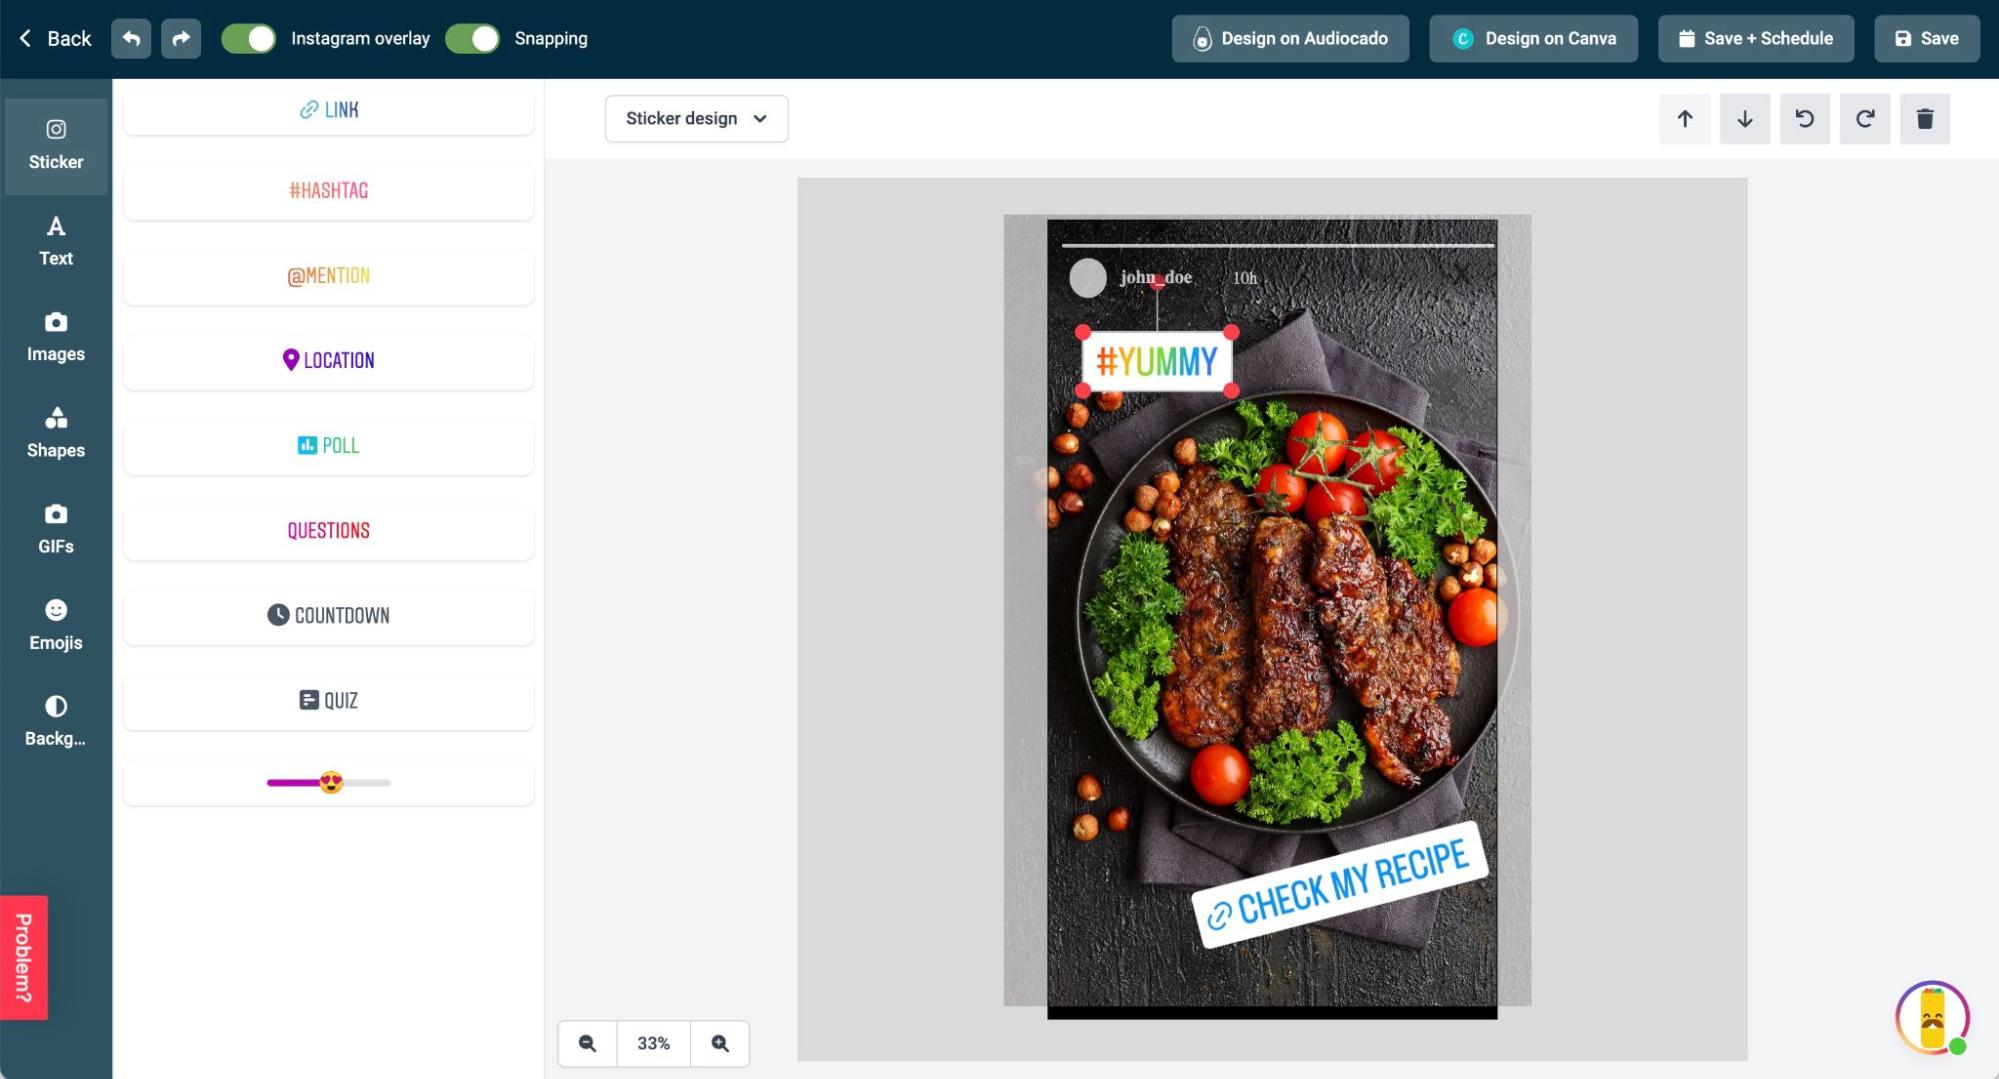 ULTIMATE Instagram Feed Planner App + Presets + Schedule + Analytics